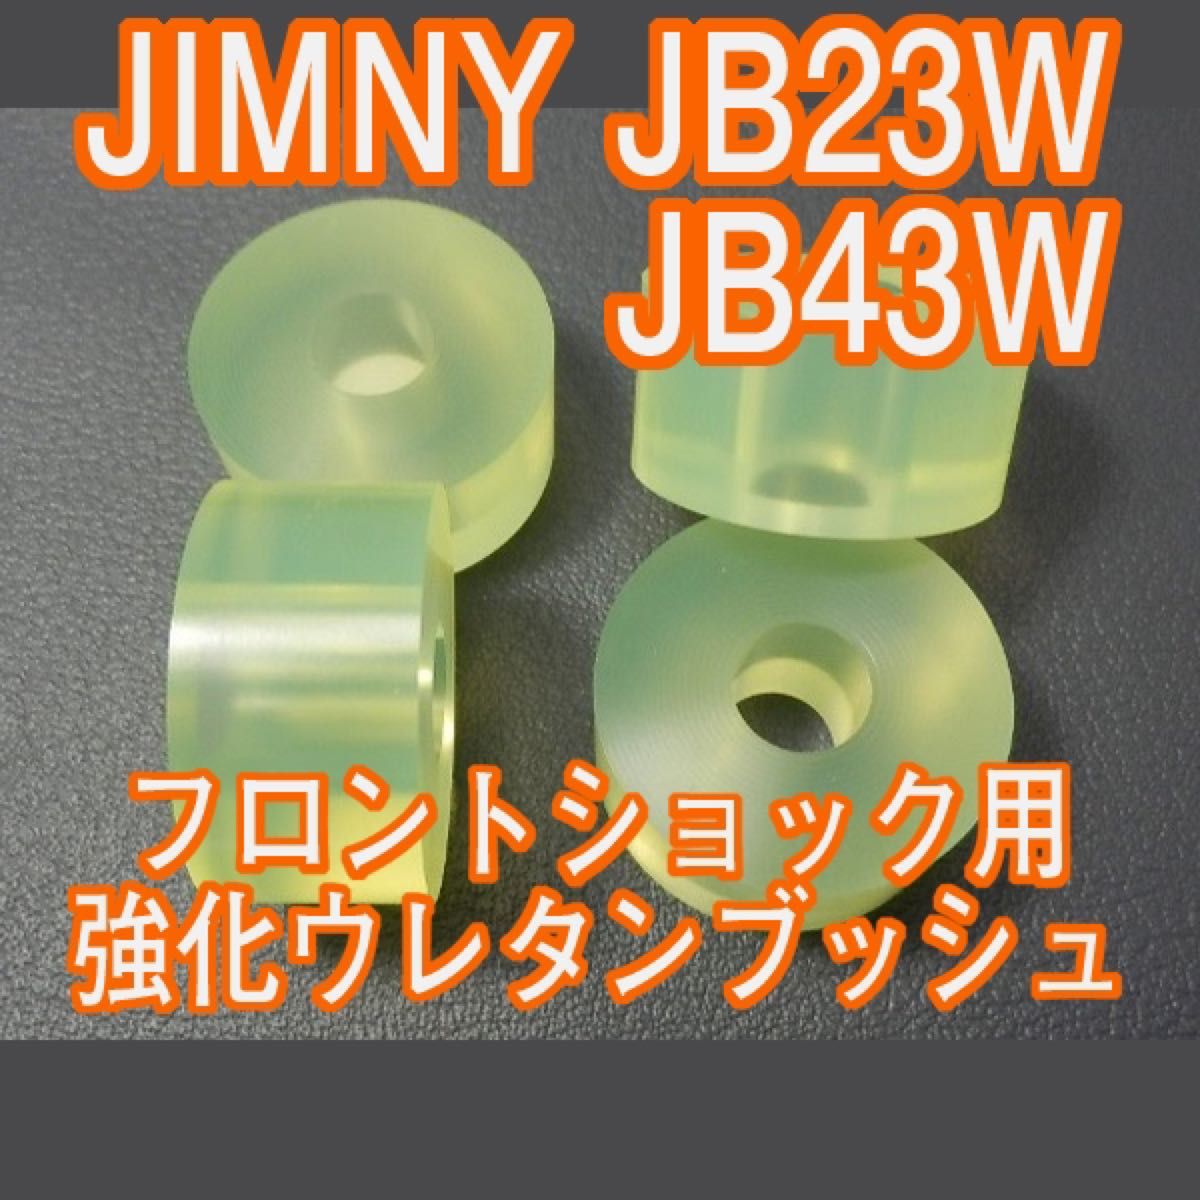 Tuningfan ジムニー JB23W シエラ JB43W ウレタン製 強化フロントショック ブッシュ 日本製 耐候剤配合